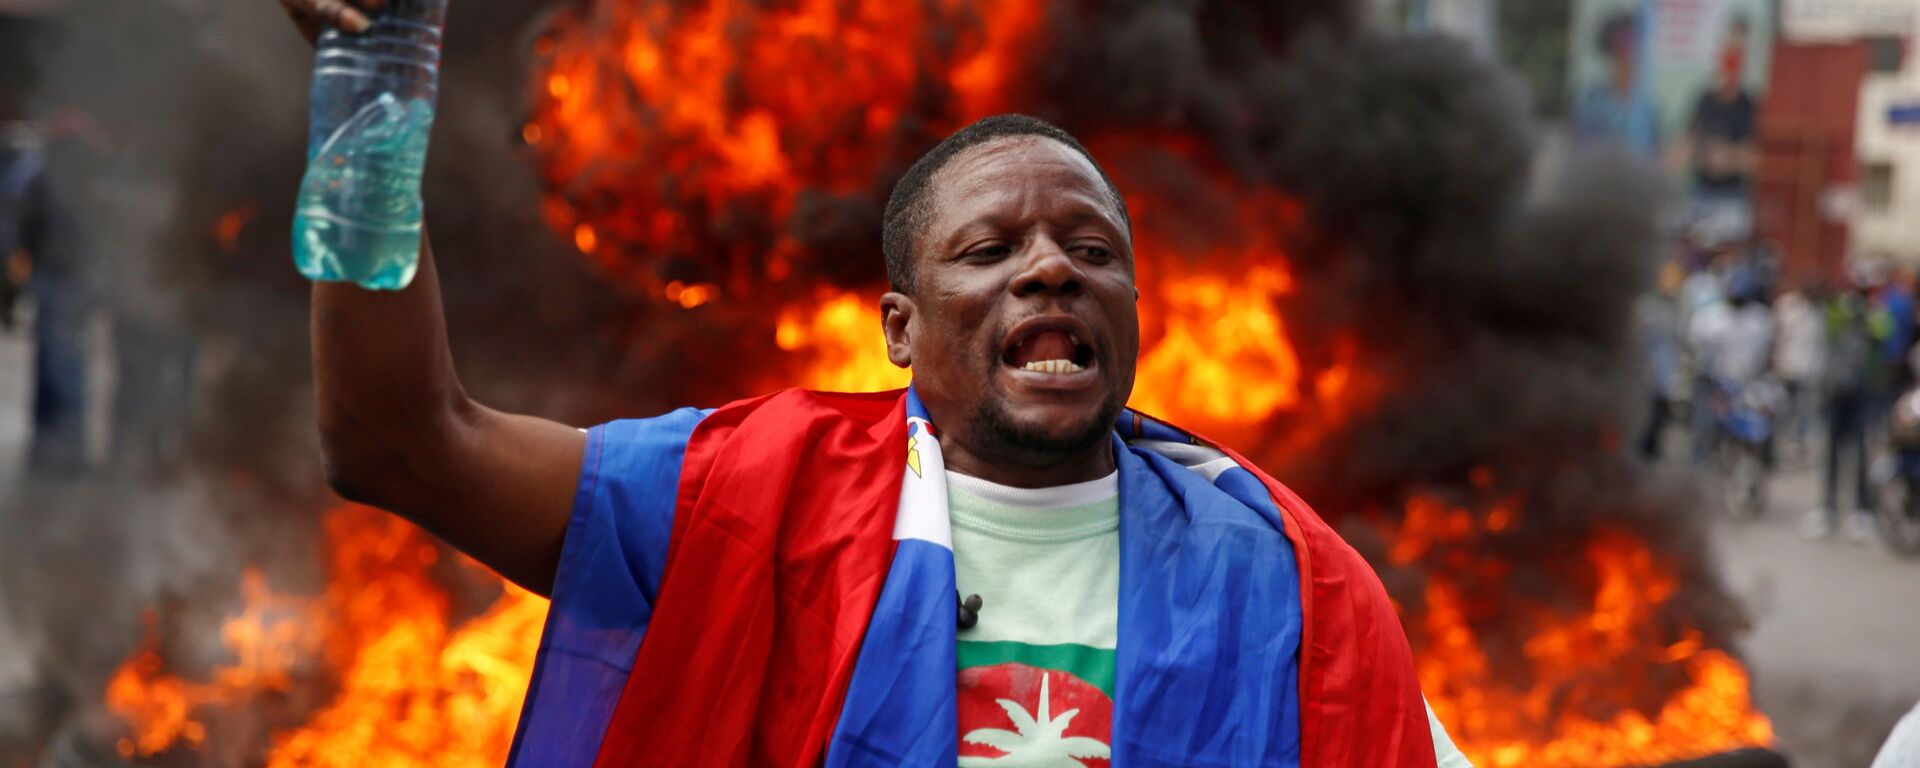 Un participante de protestas en Haití - Sputnik Mundo, 1920, 08.07.2021